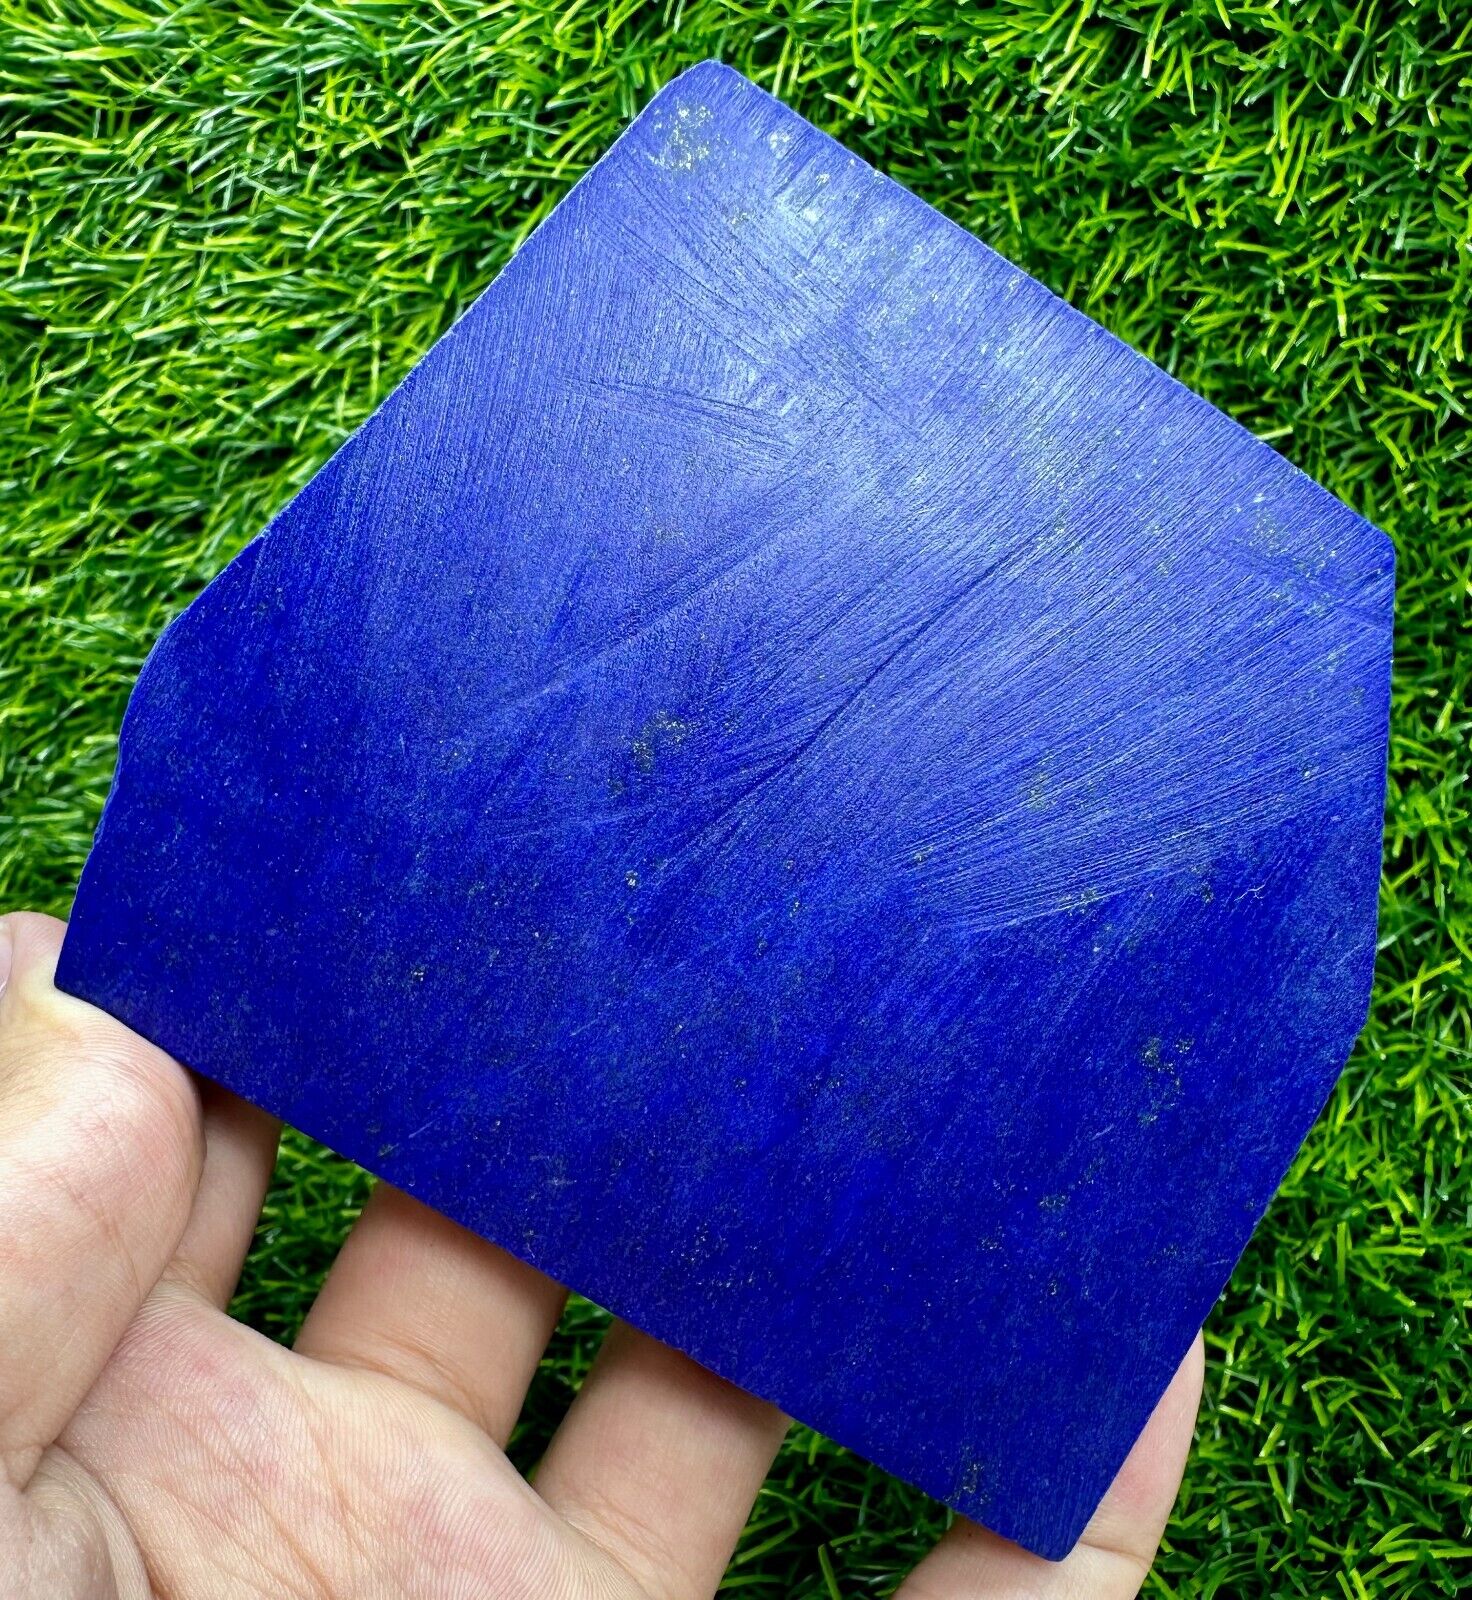 322 Gm A+++ Quality Natural Lapis Lazuli Tiles, Lapis Lazuli Slice, Slab @AFG